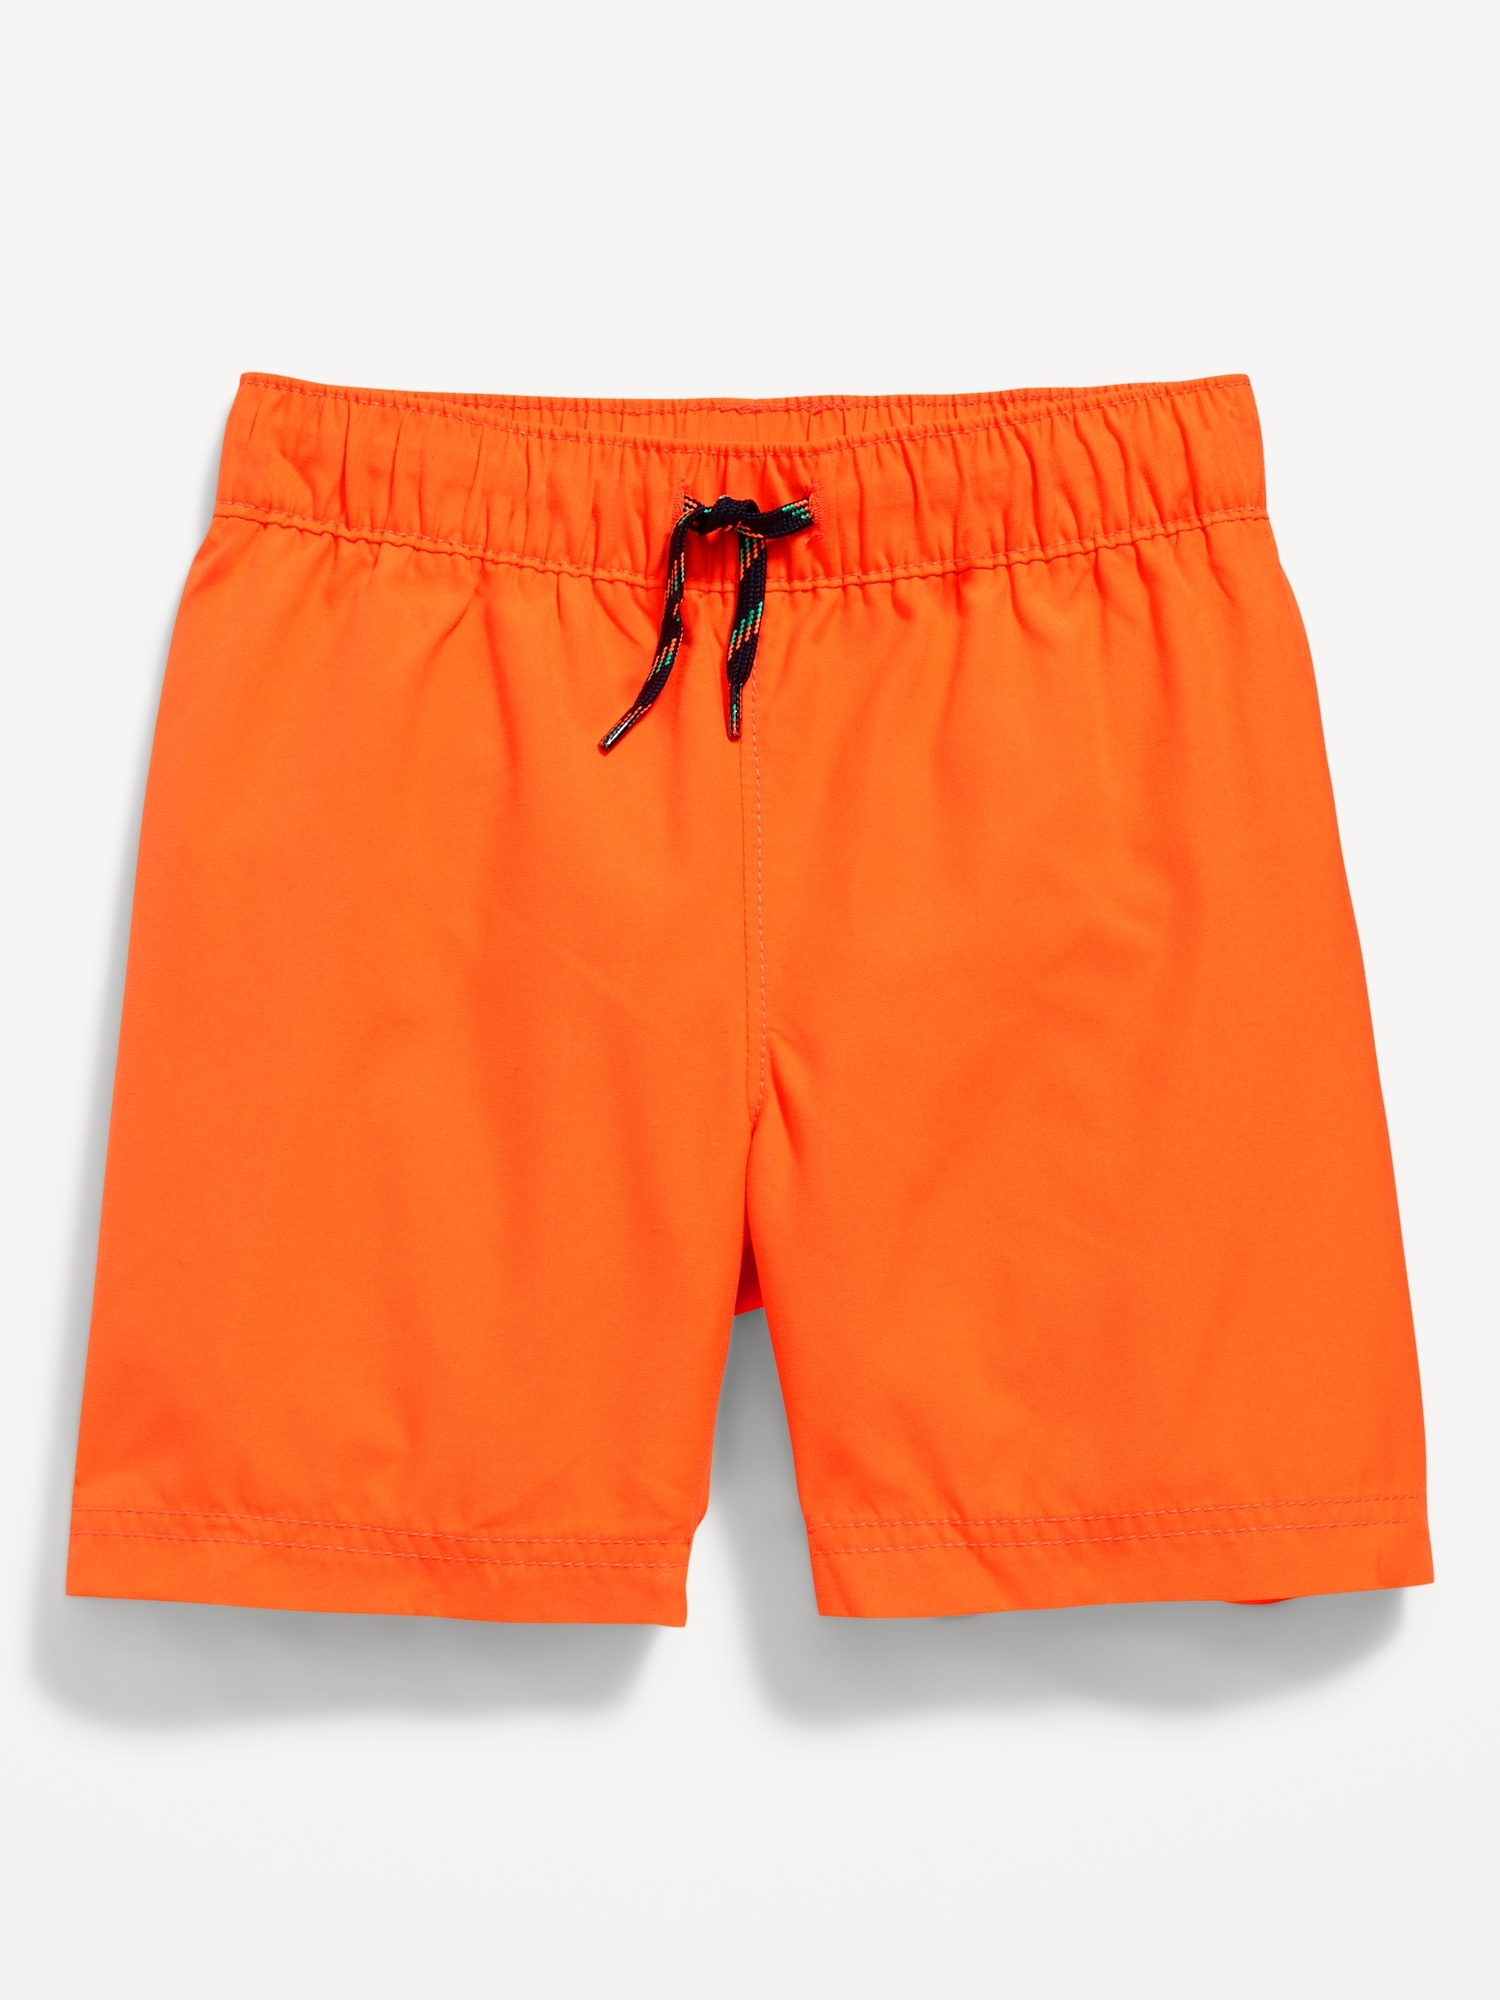 Old Navy Solid Swim Trunks for Toddler Boys orange. 1